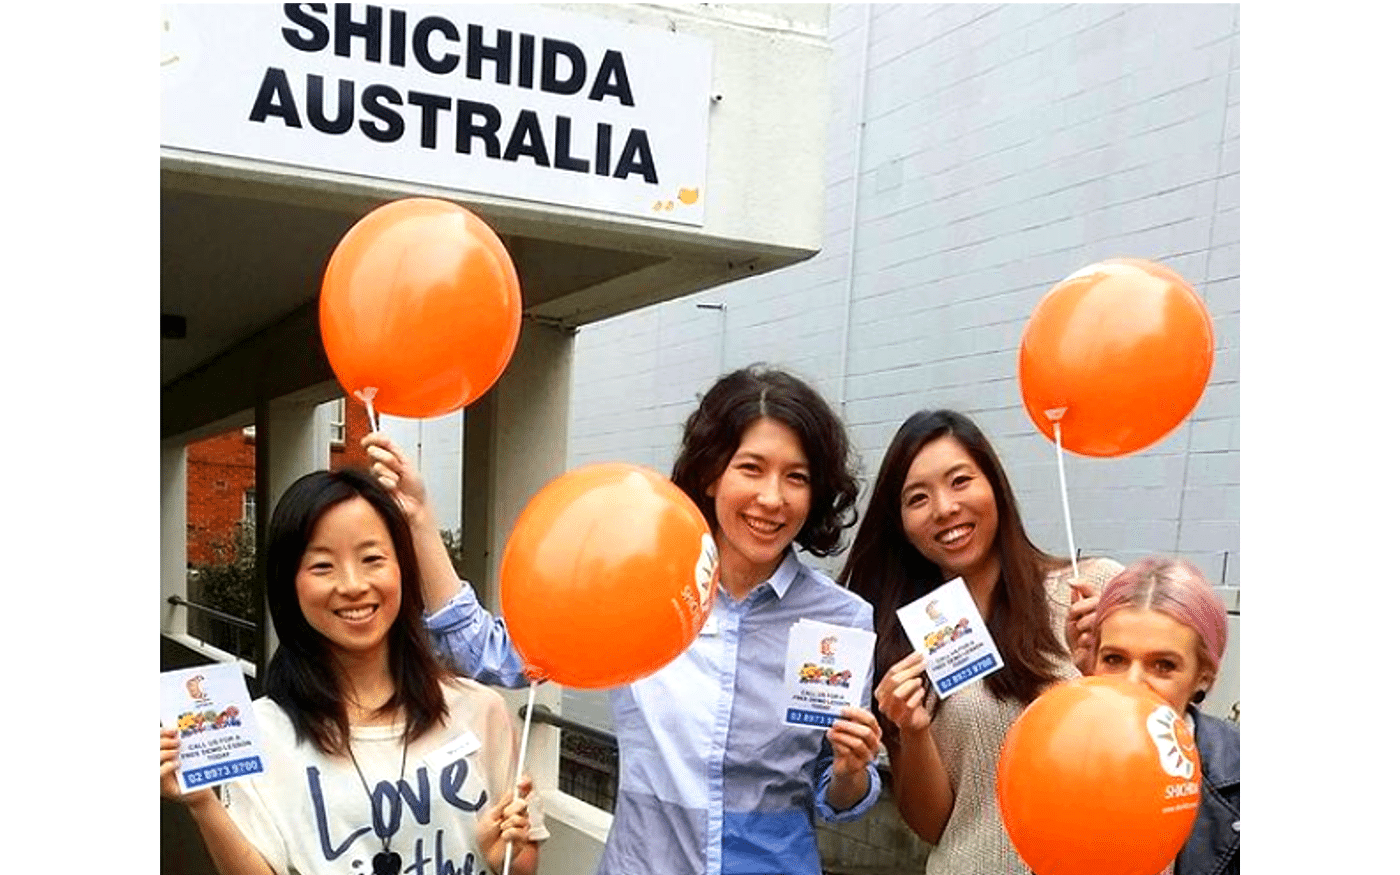 Shichida Chatswood Staff holding balloons